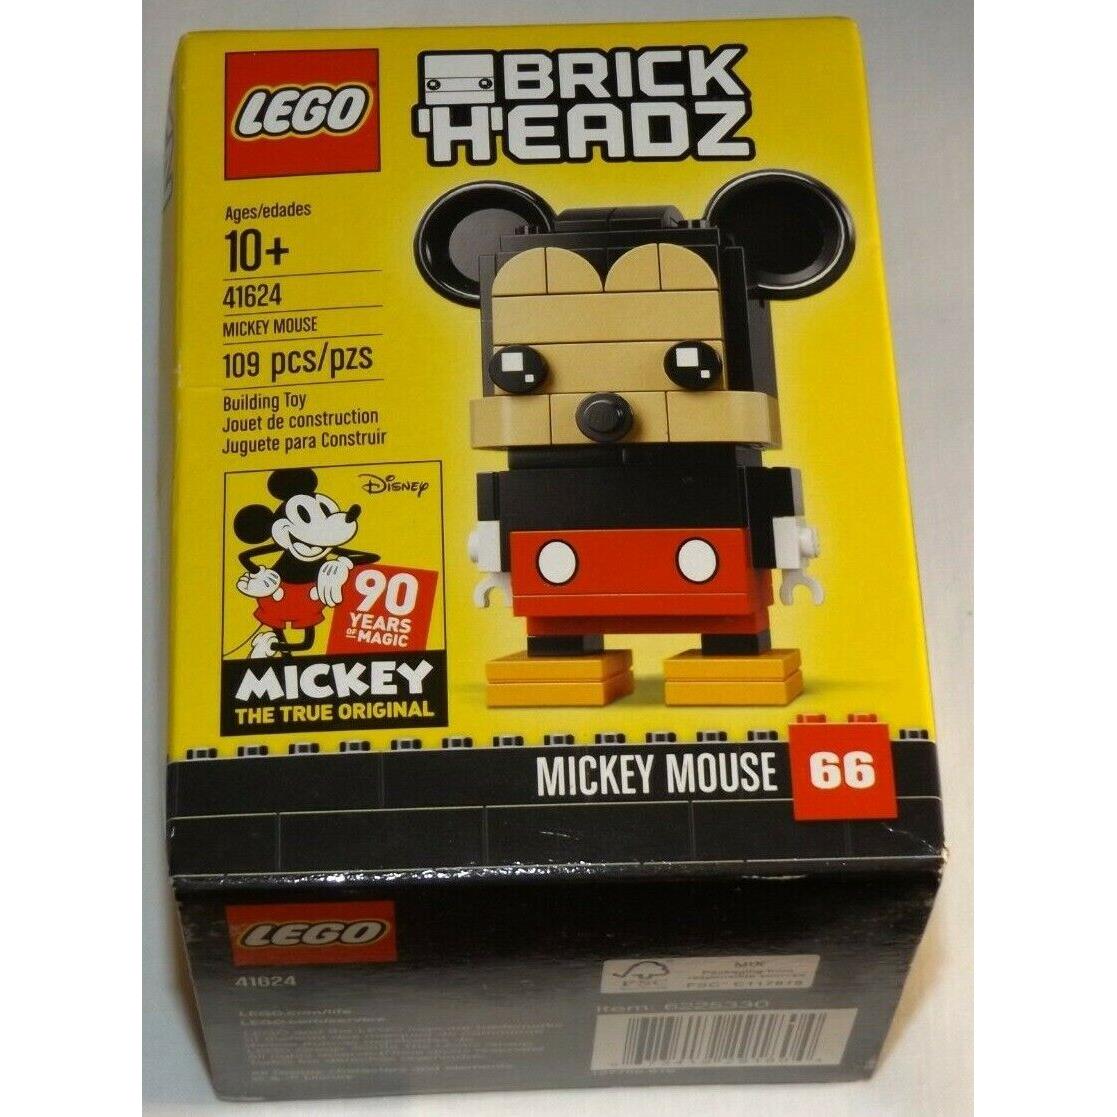 Lego Brickheadz Mickey Mouse Disney 41624 66 90 Years of Magic